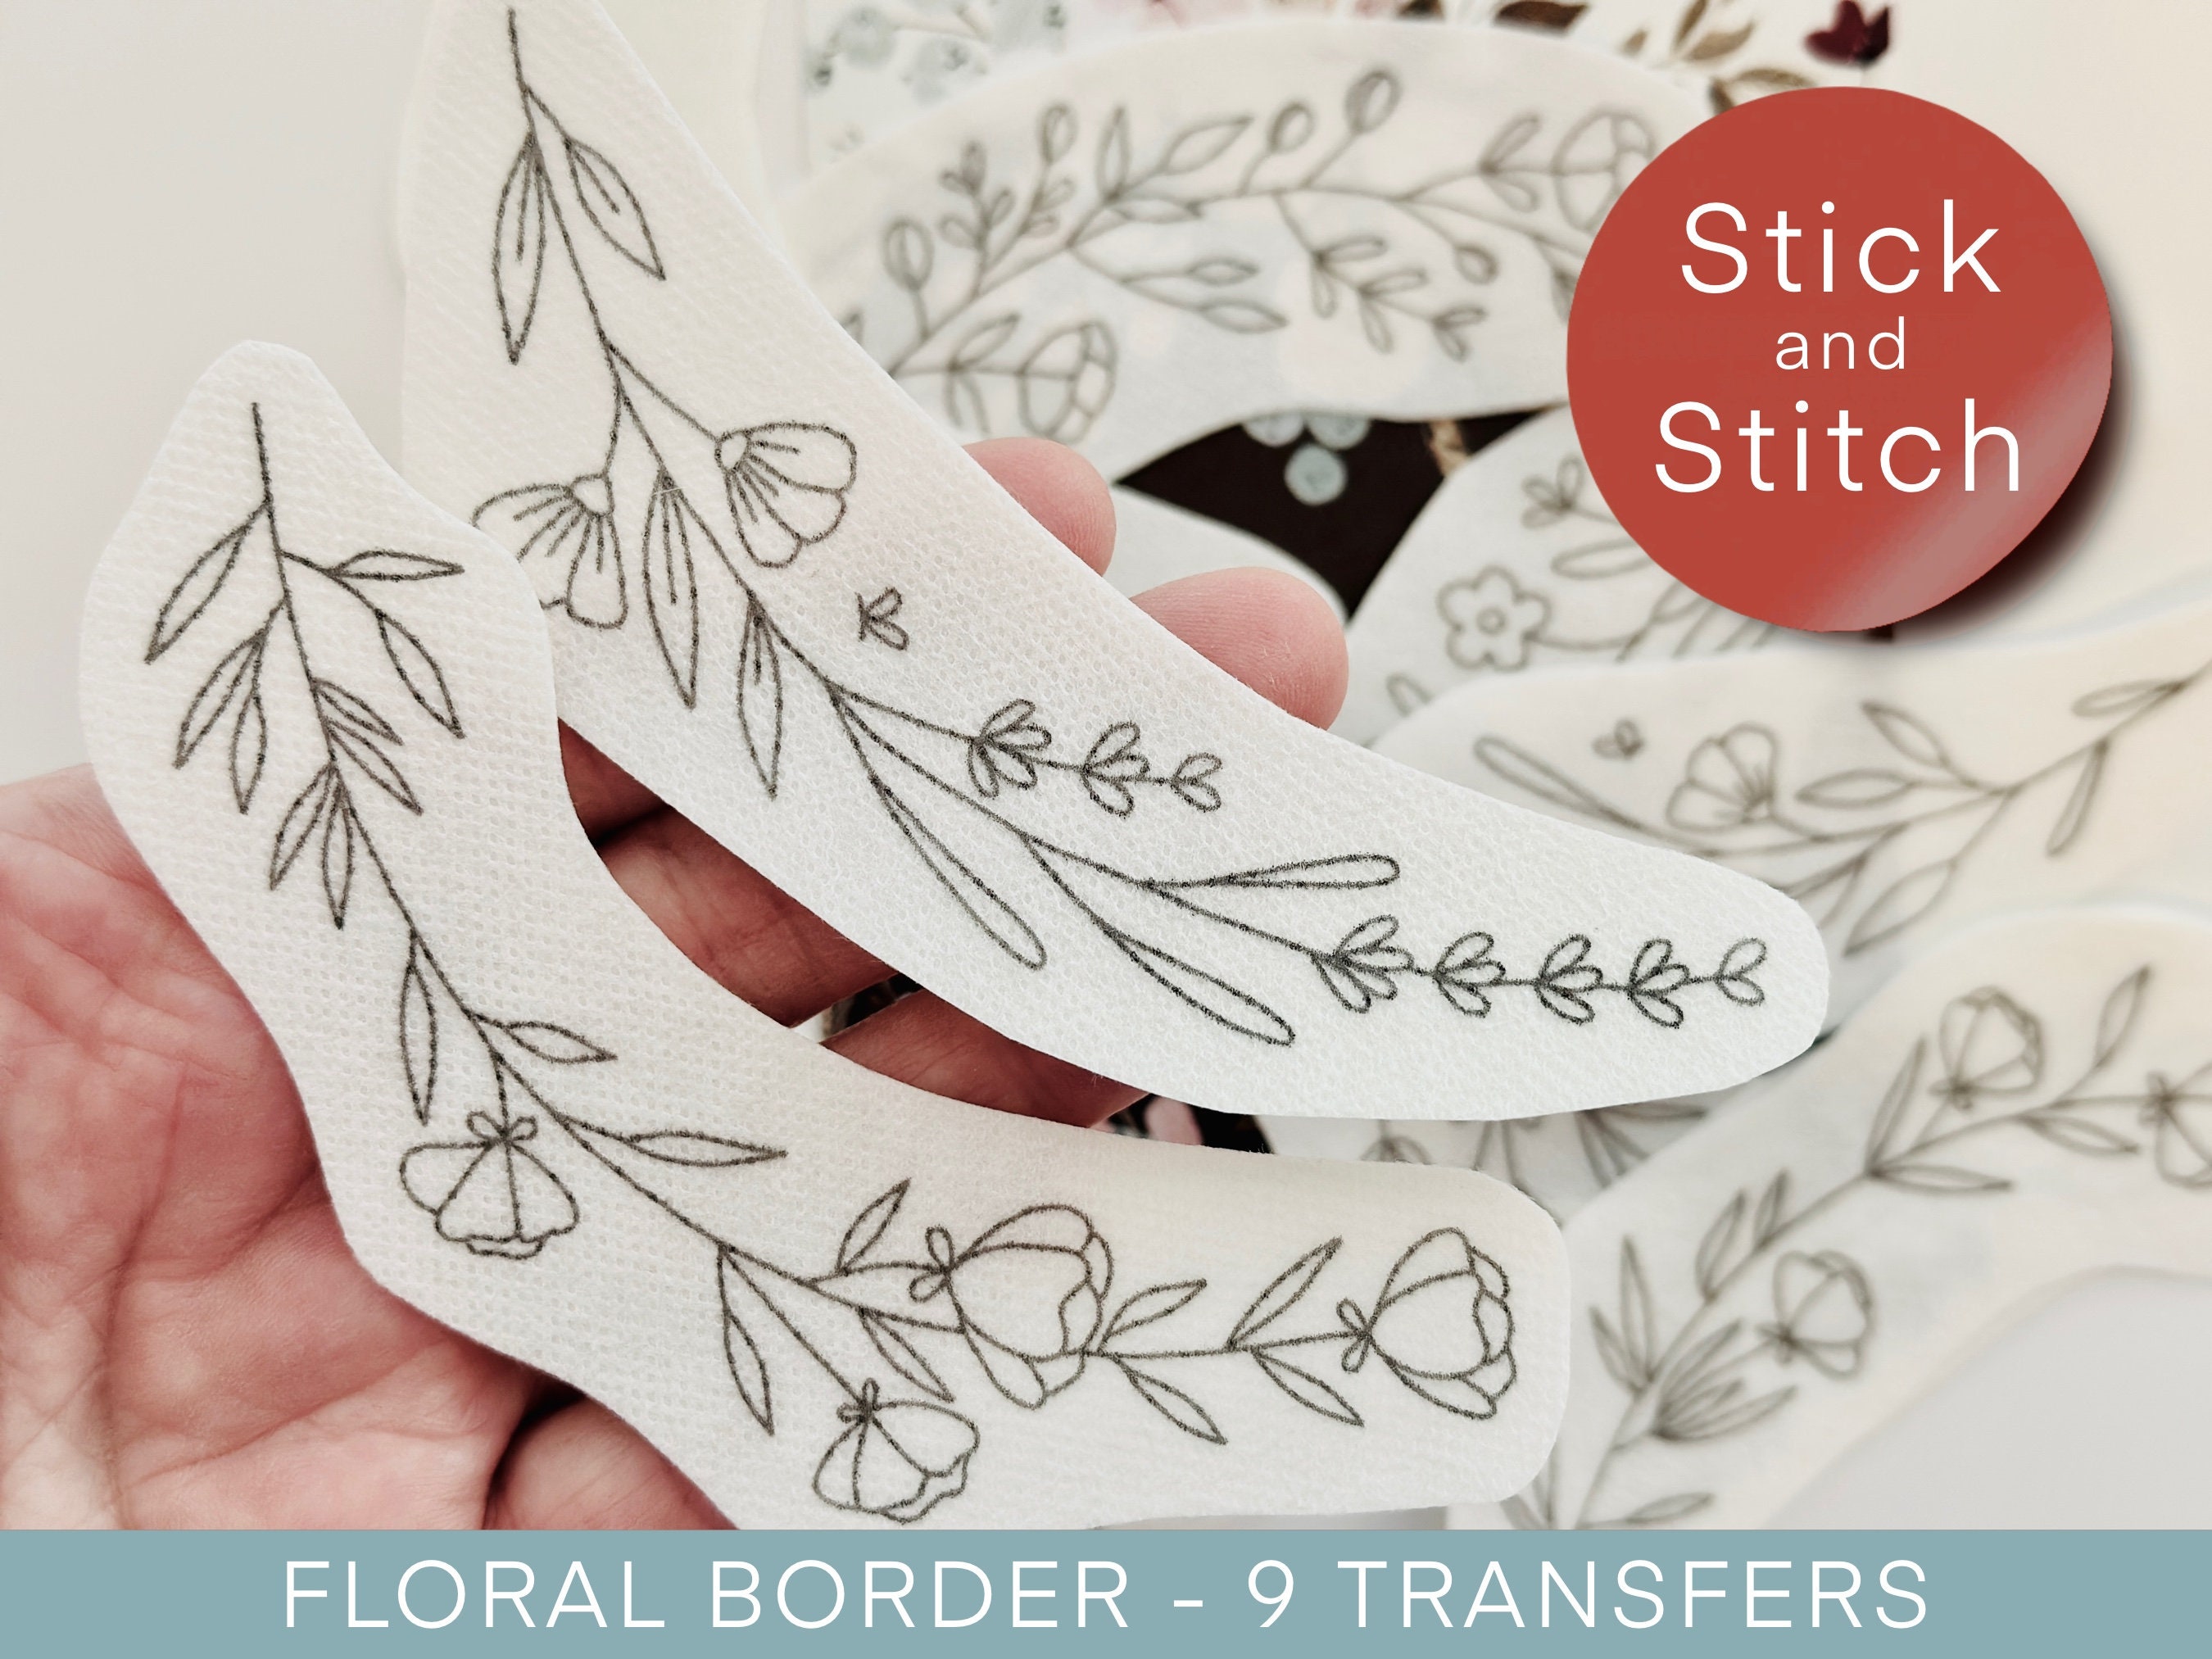 Stick 'n Stitch Transfer Sheets - Stitched Modern